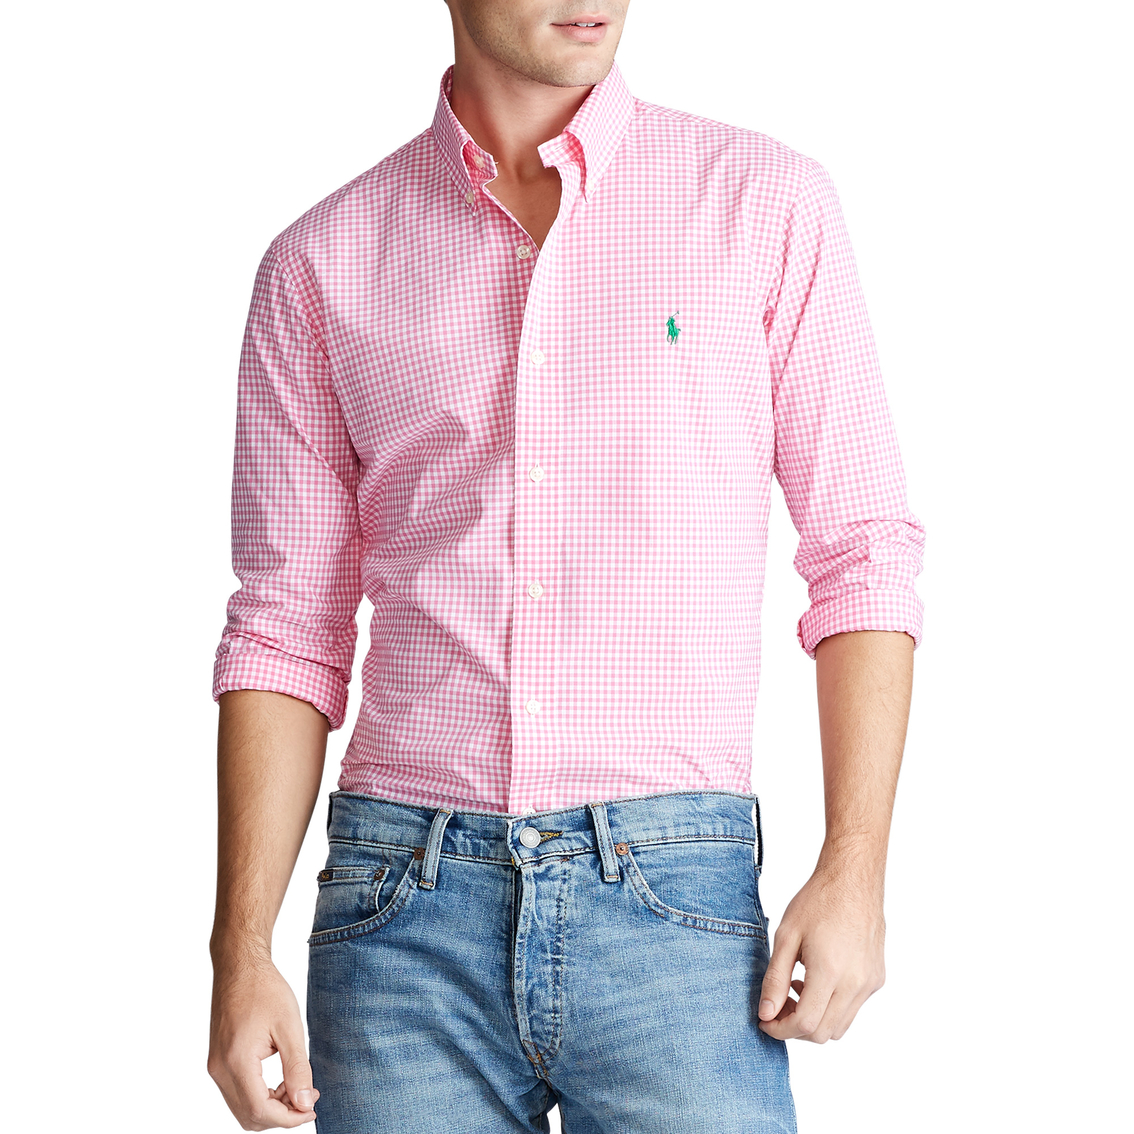 Polo Ralph Lauren Classic Fit Gingham Shirt | Shirts | Clothing ...